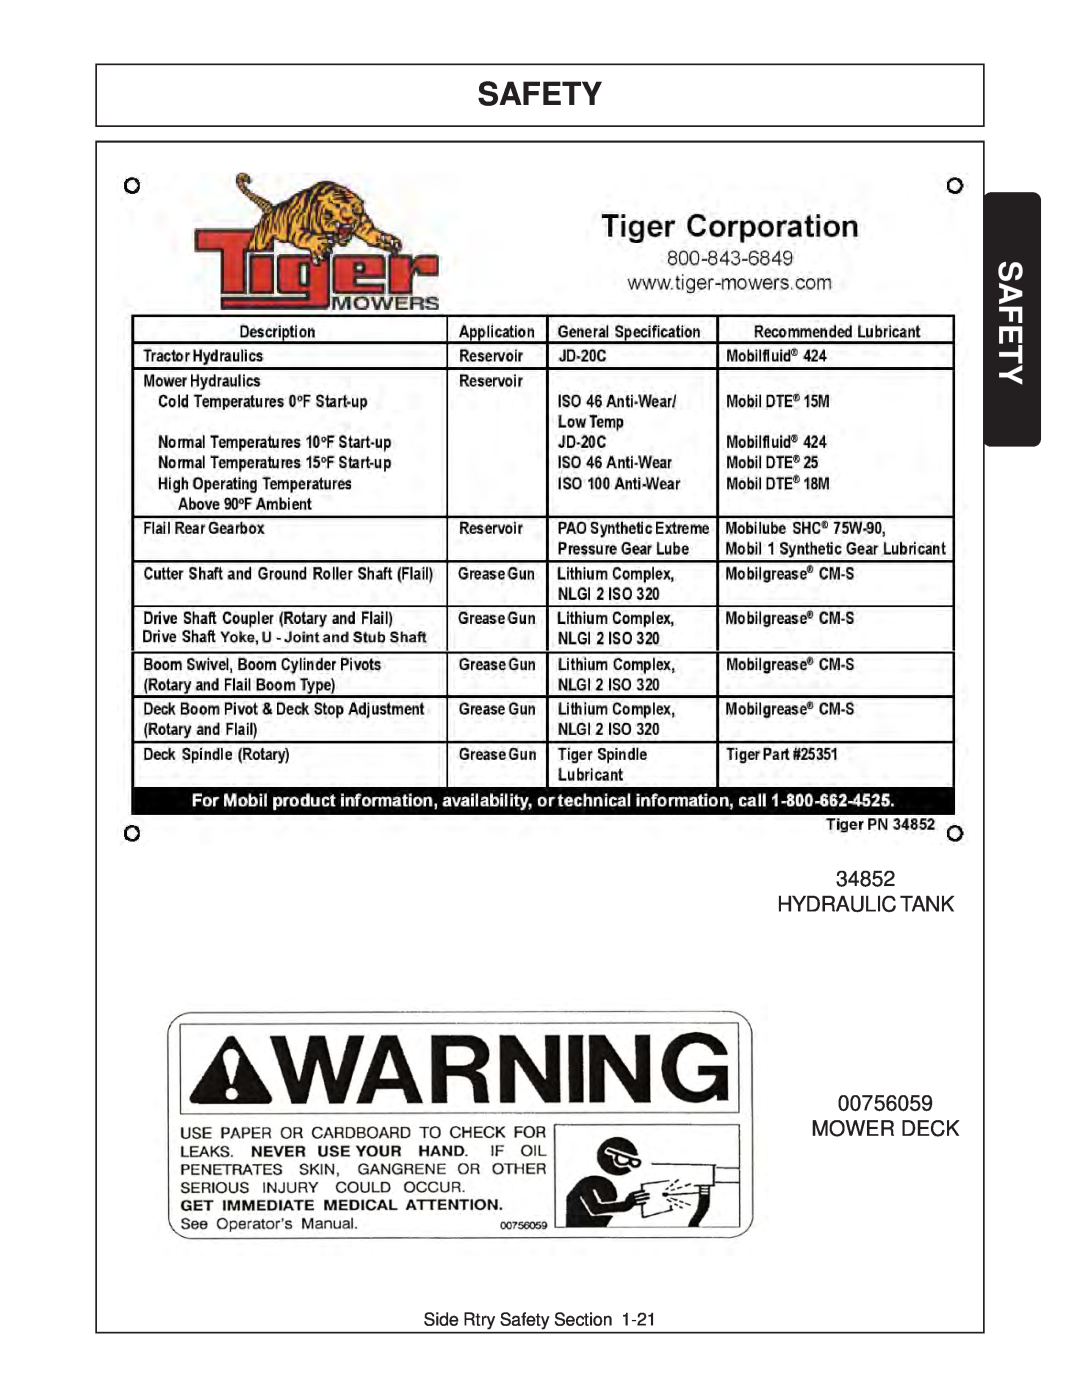 Tiger Products Co., Ltd TS 100A manual Safety, HYDRAULIC TANK 00756059 MOWER DECK 